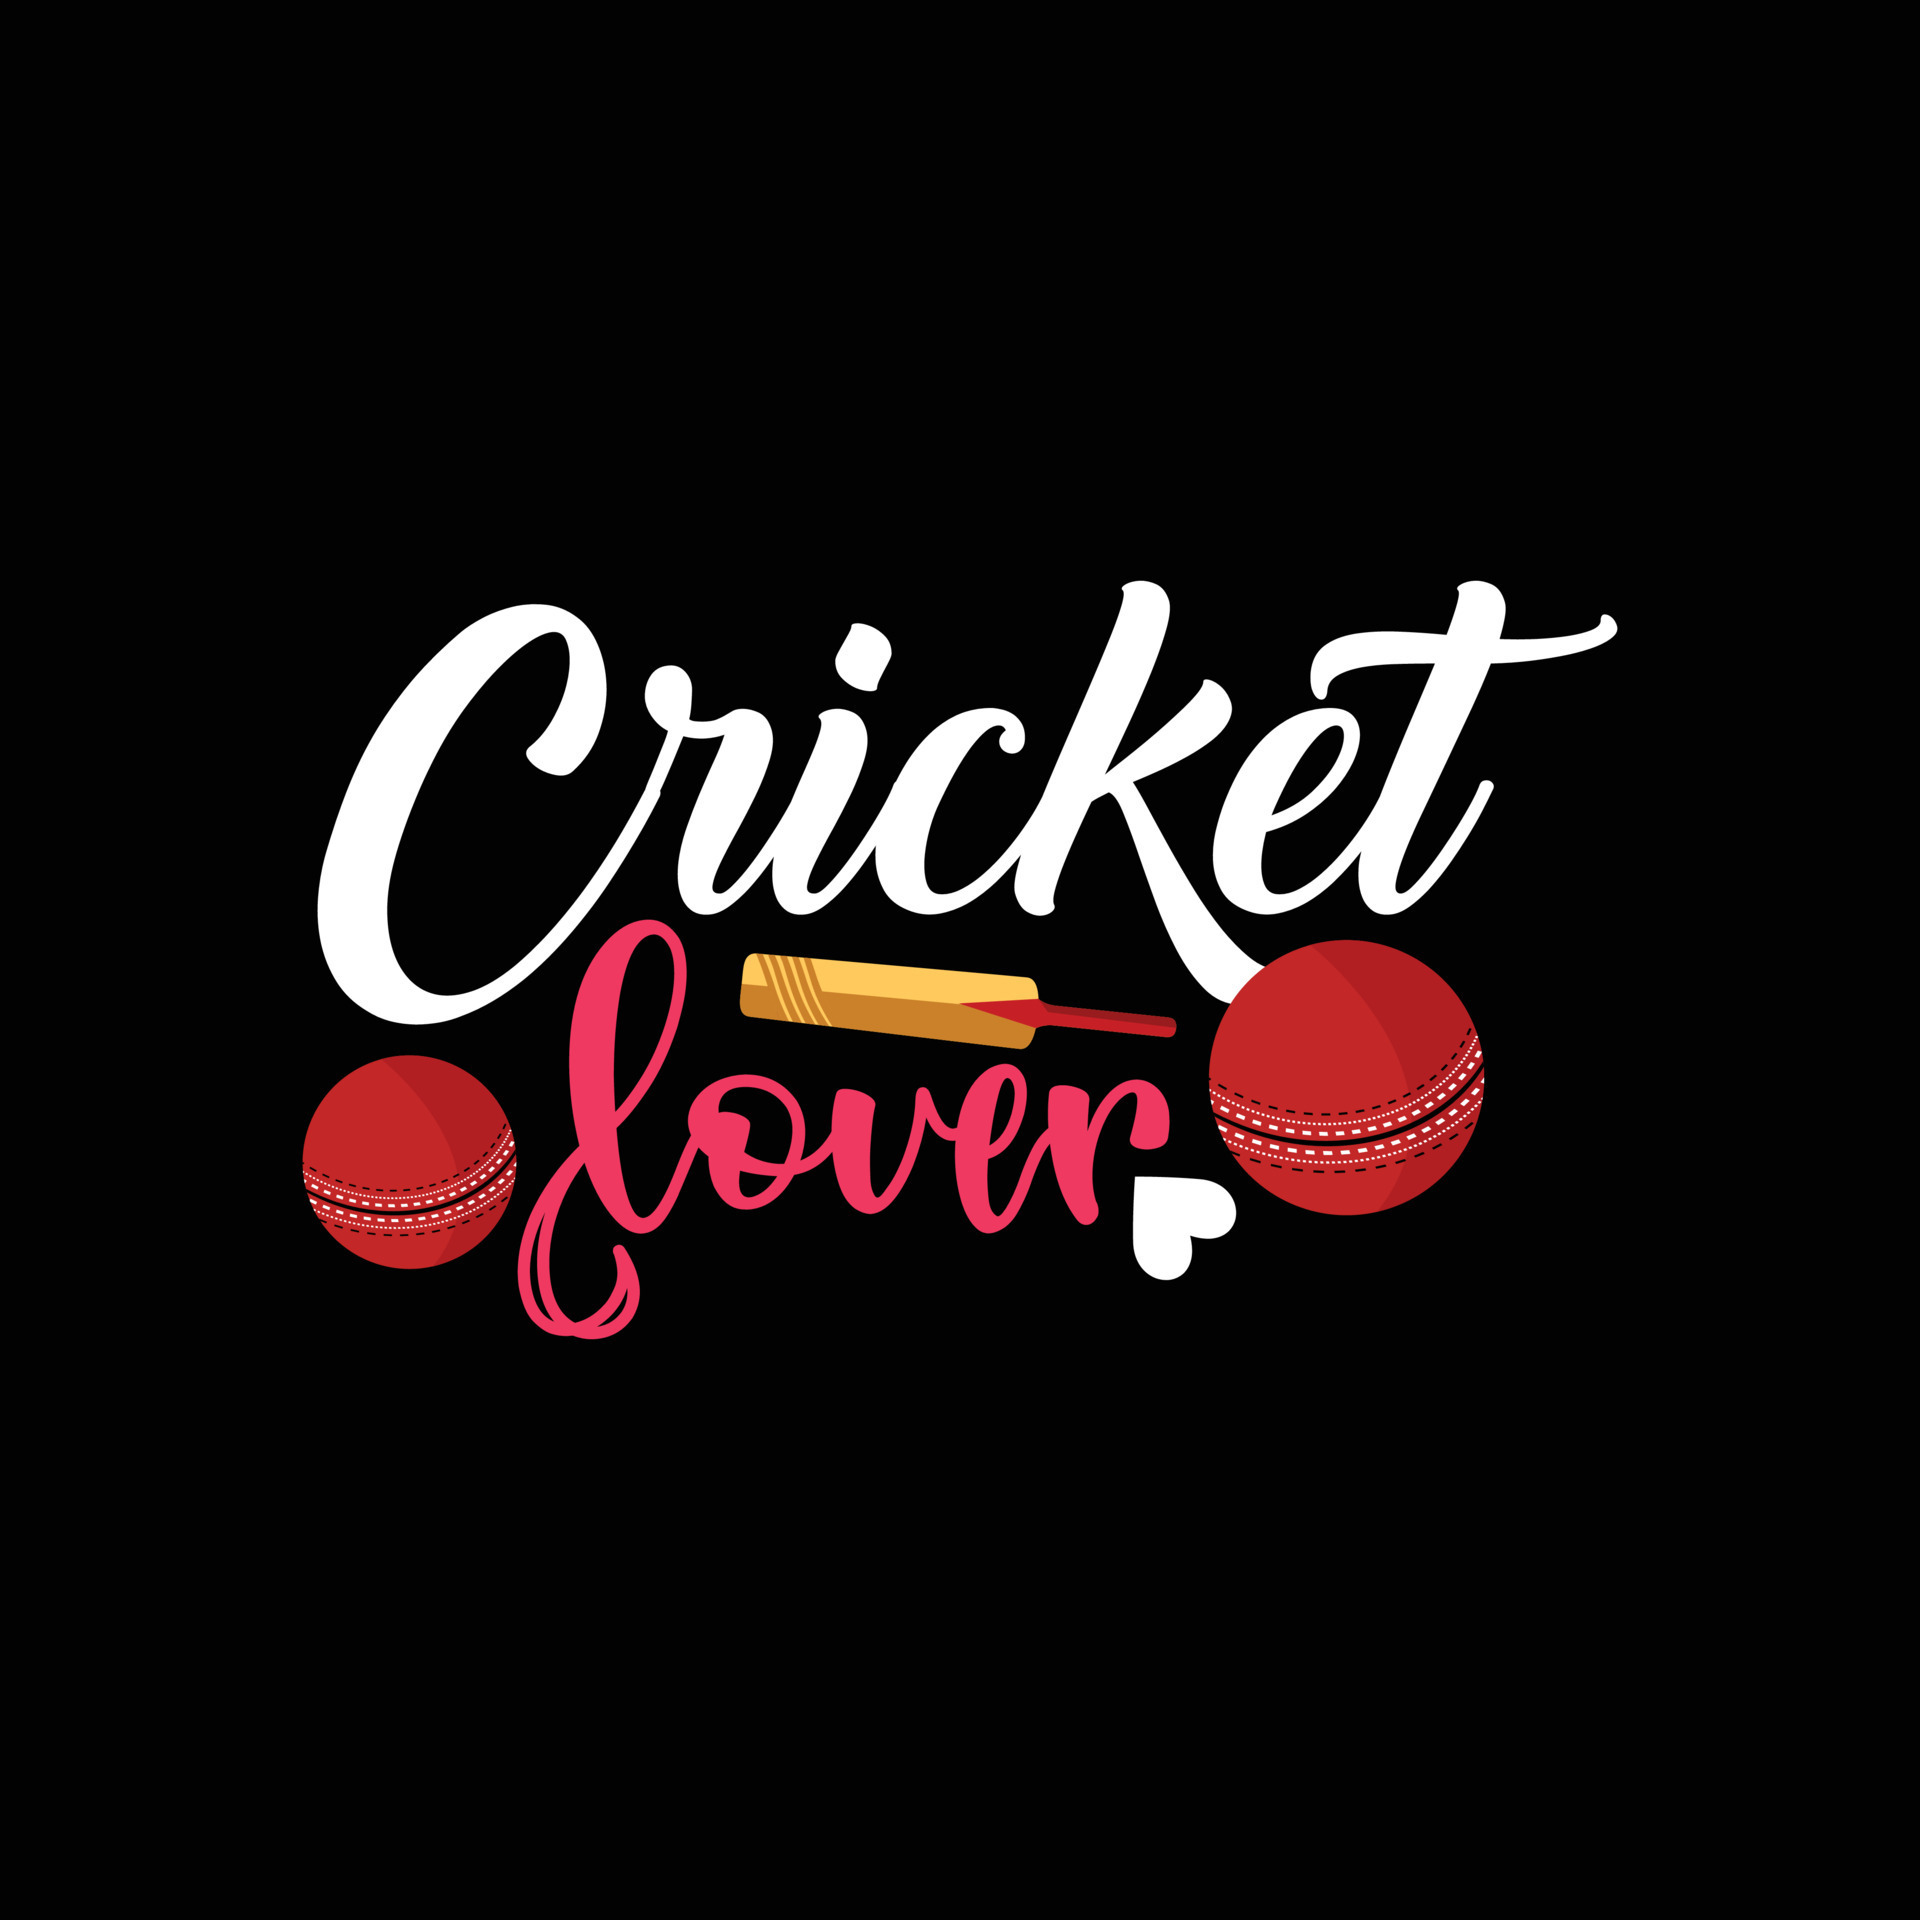 Cricket shirt logo png images | PNGWing